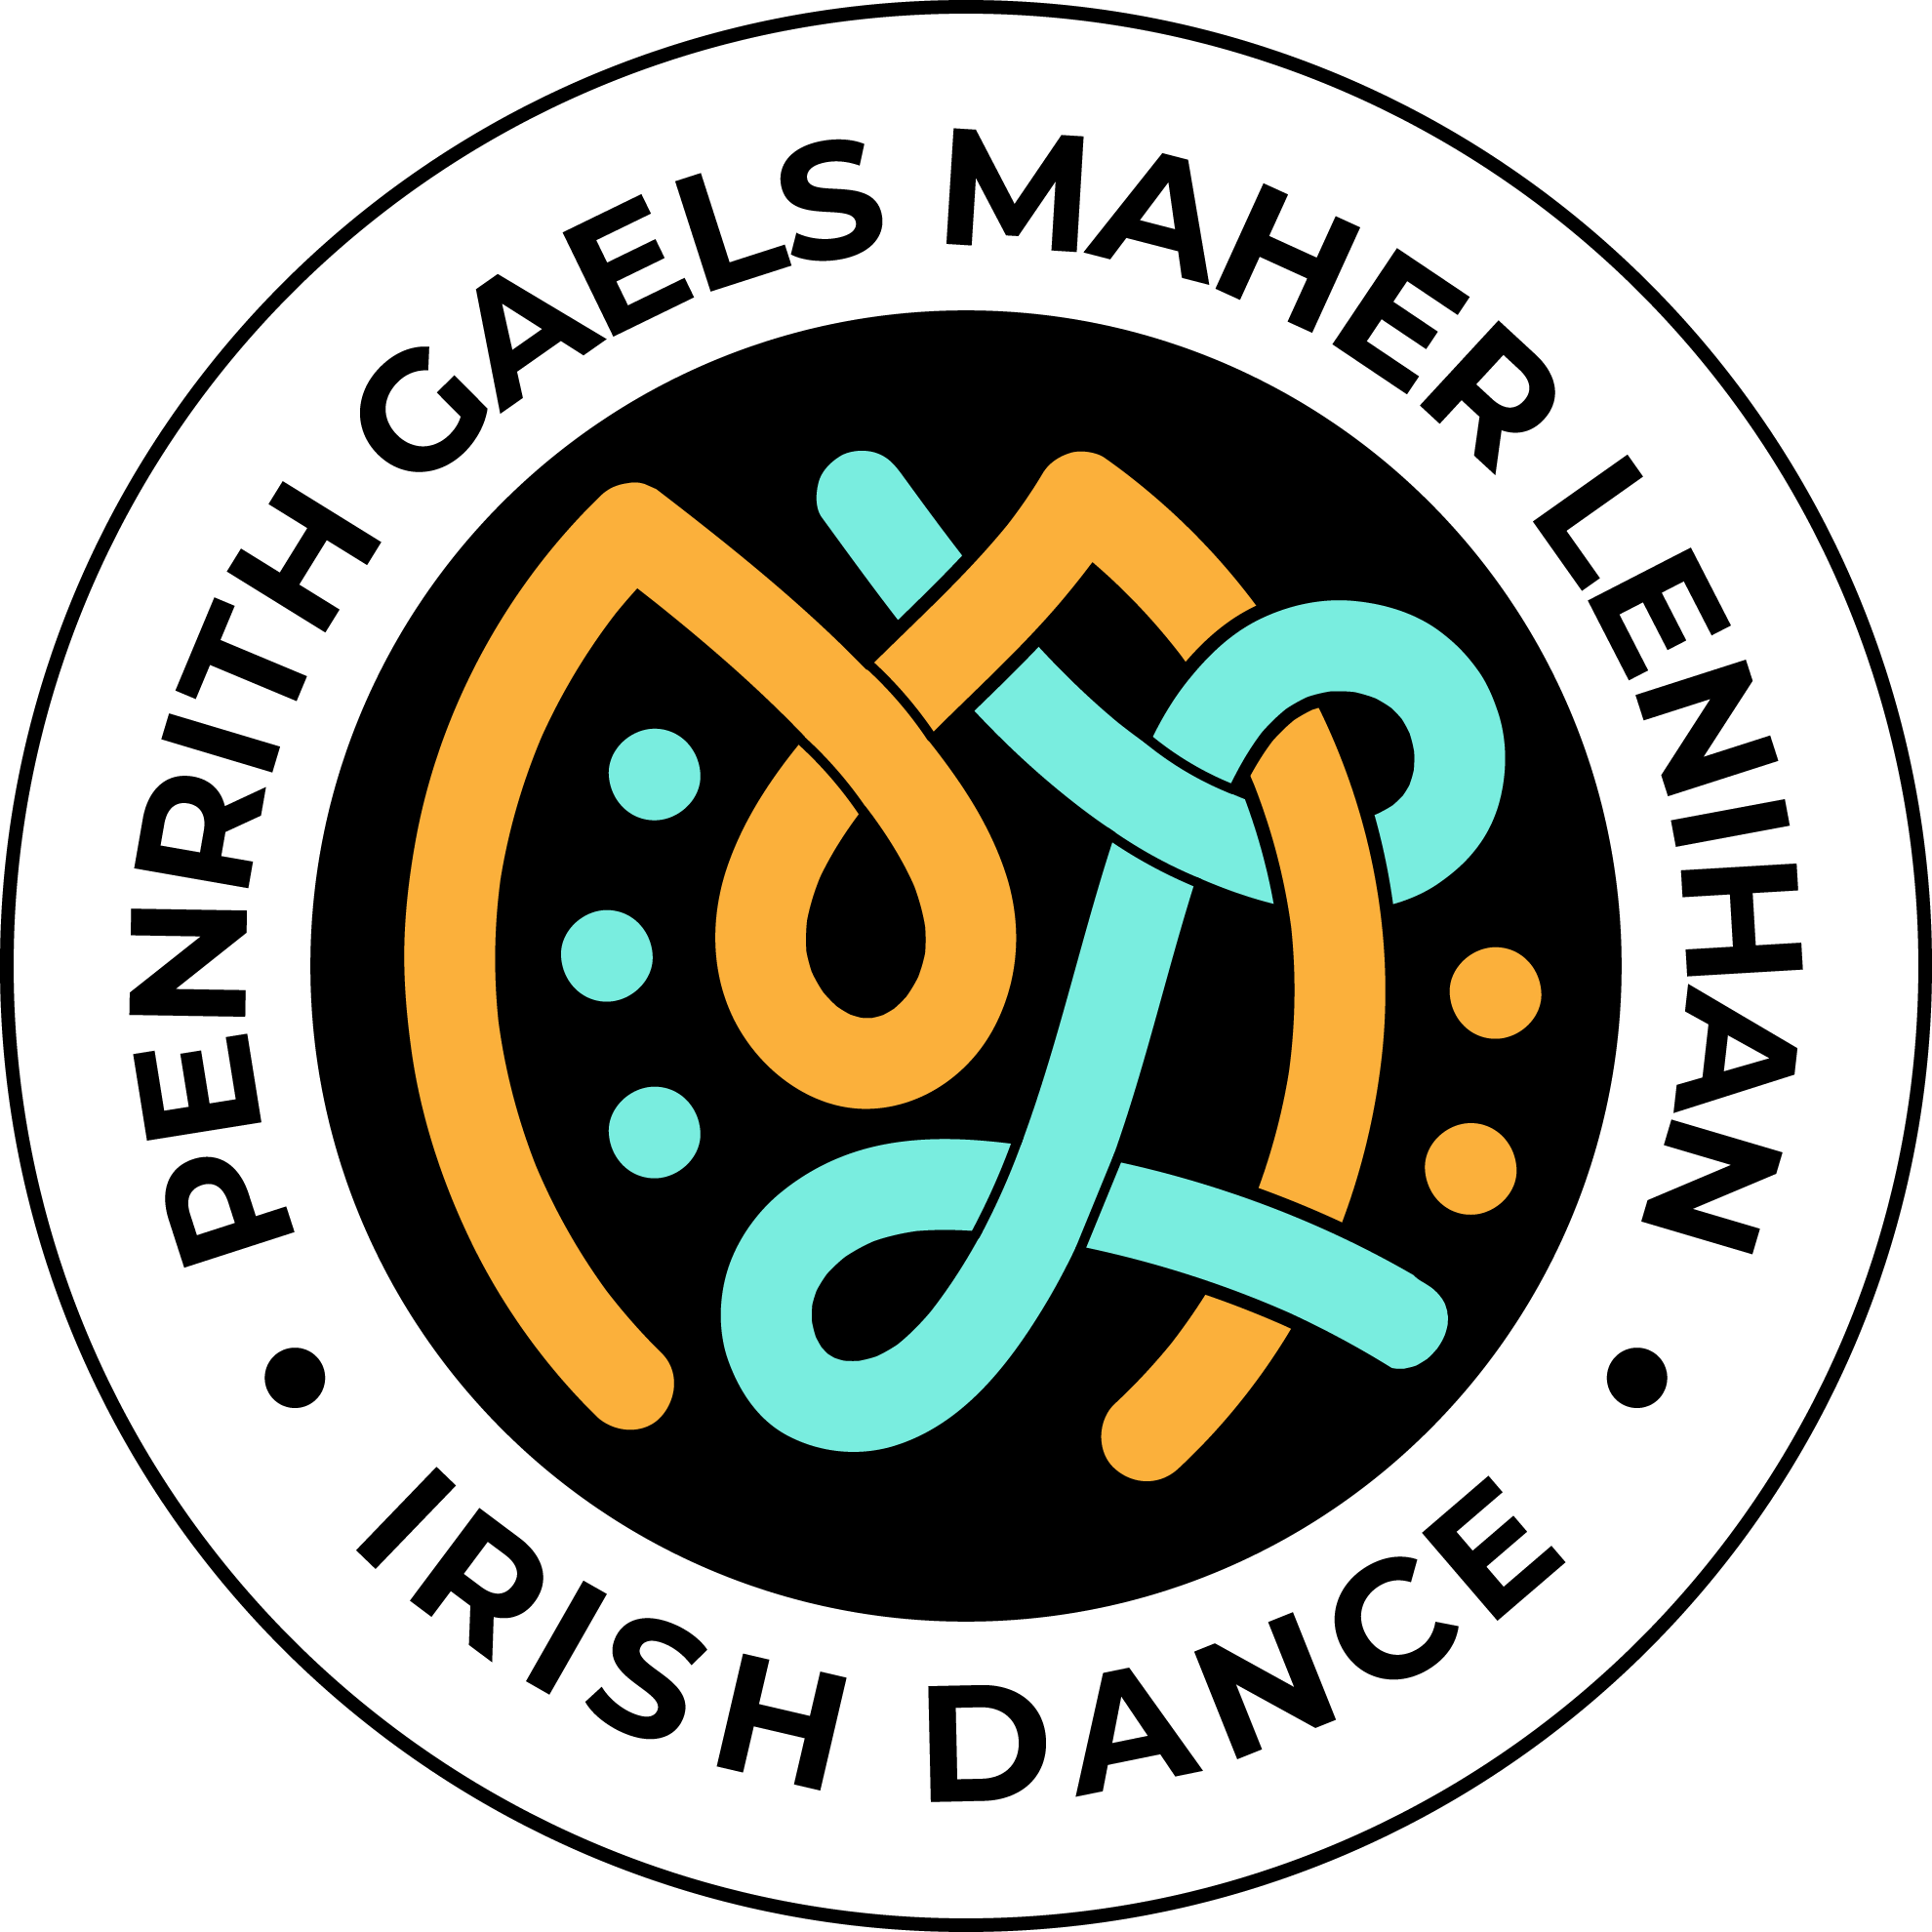 Penrith Gaels Maher Lenihan Irish Dance